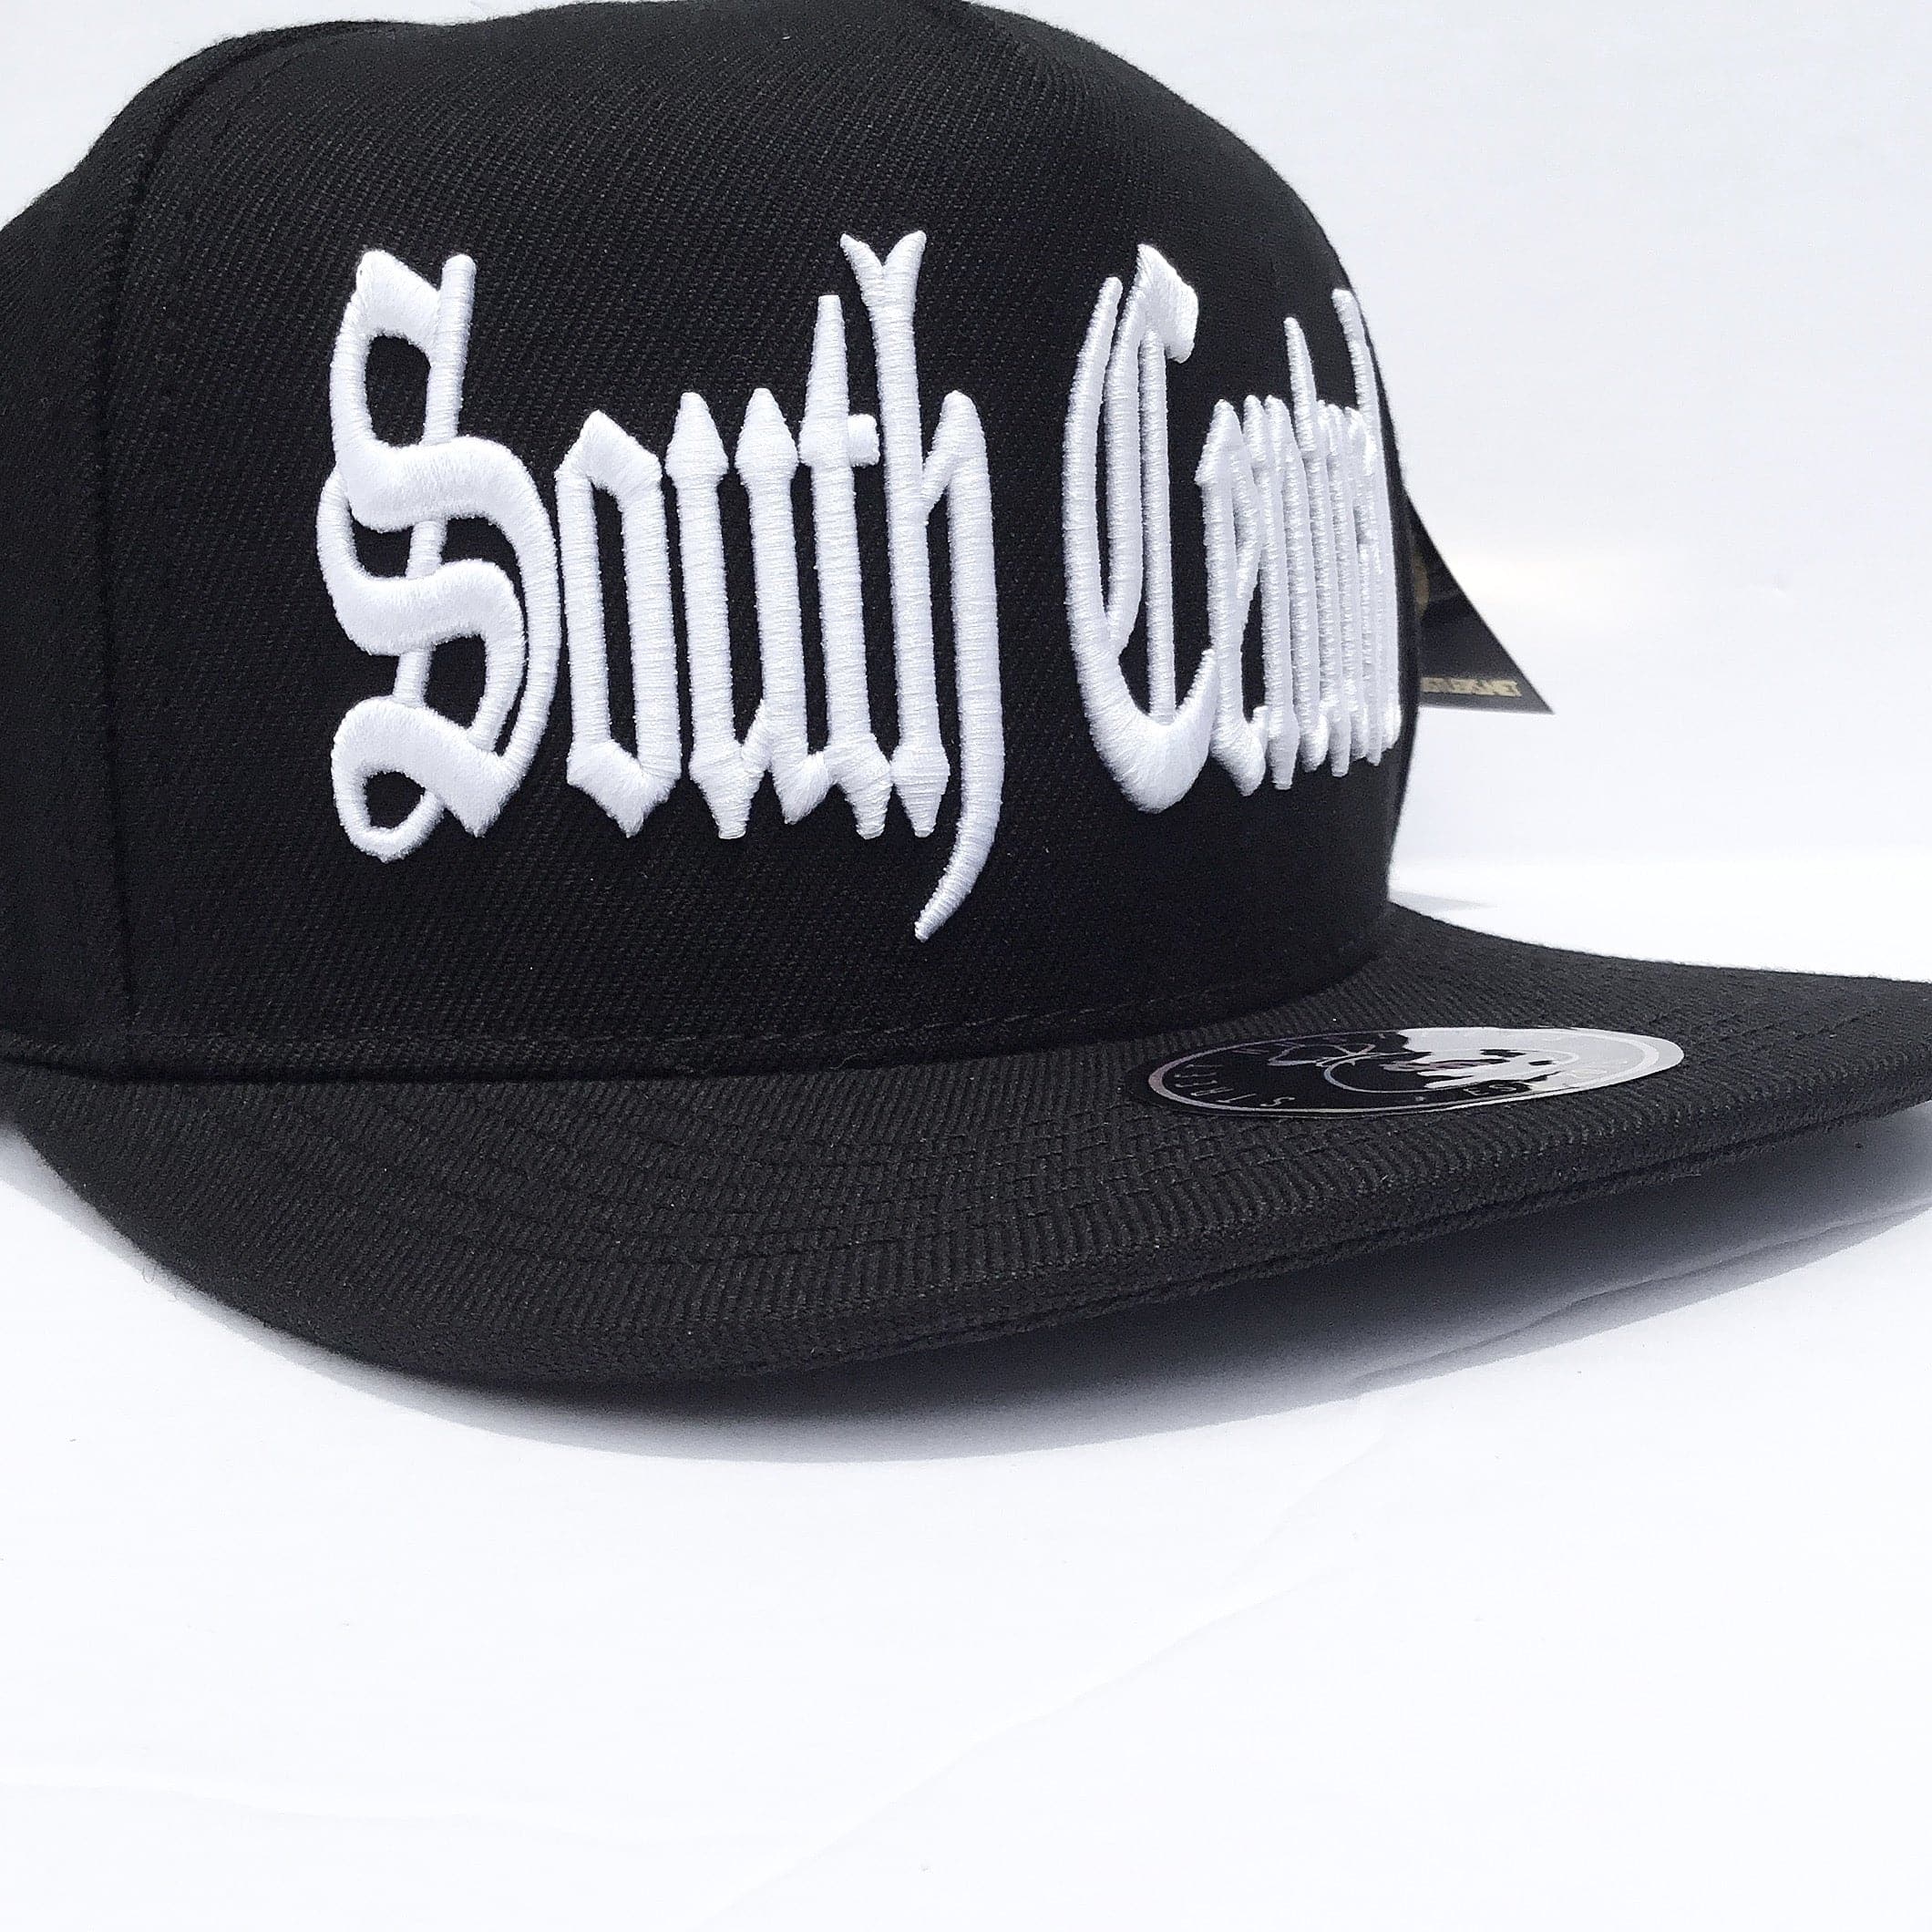 South Central SnpaBack (Black)